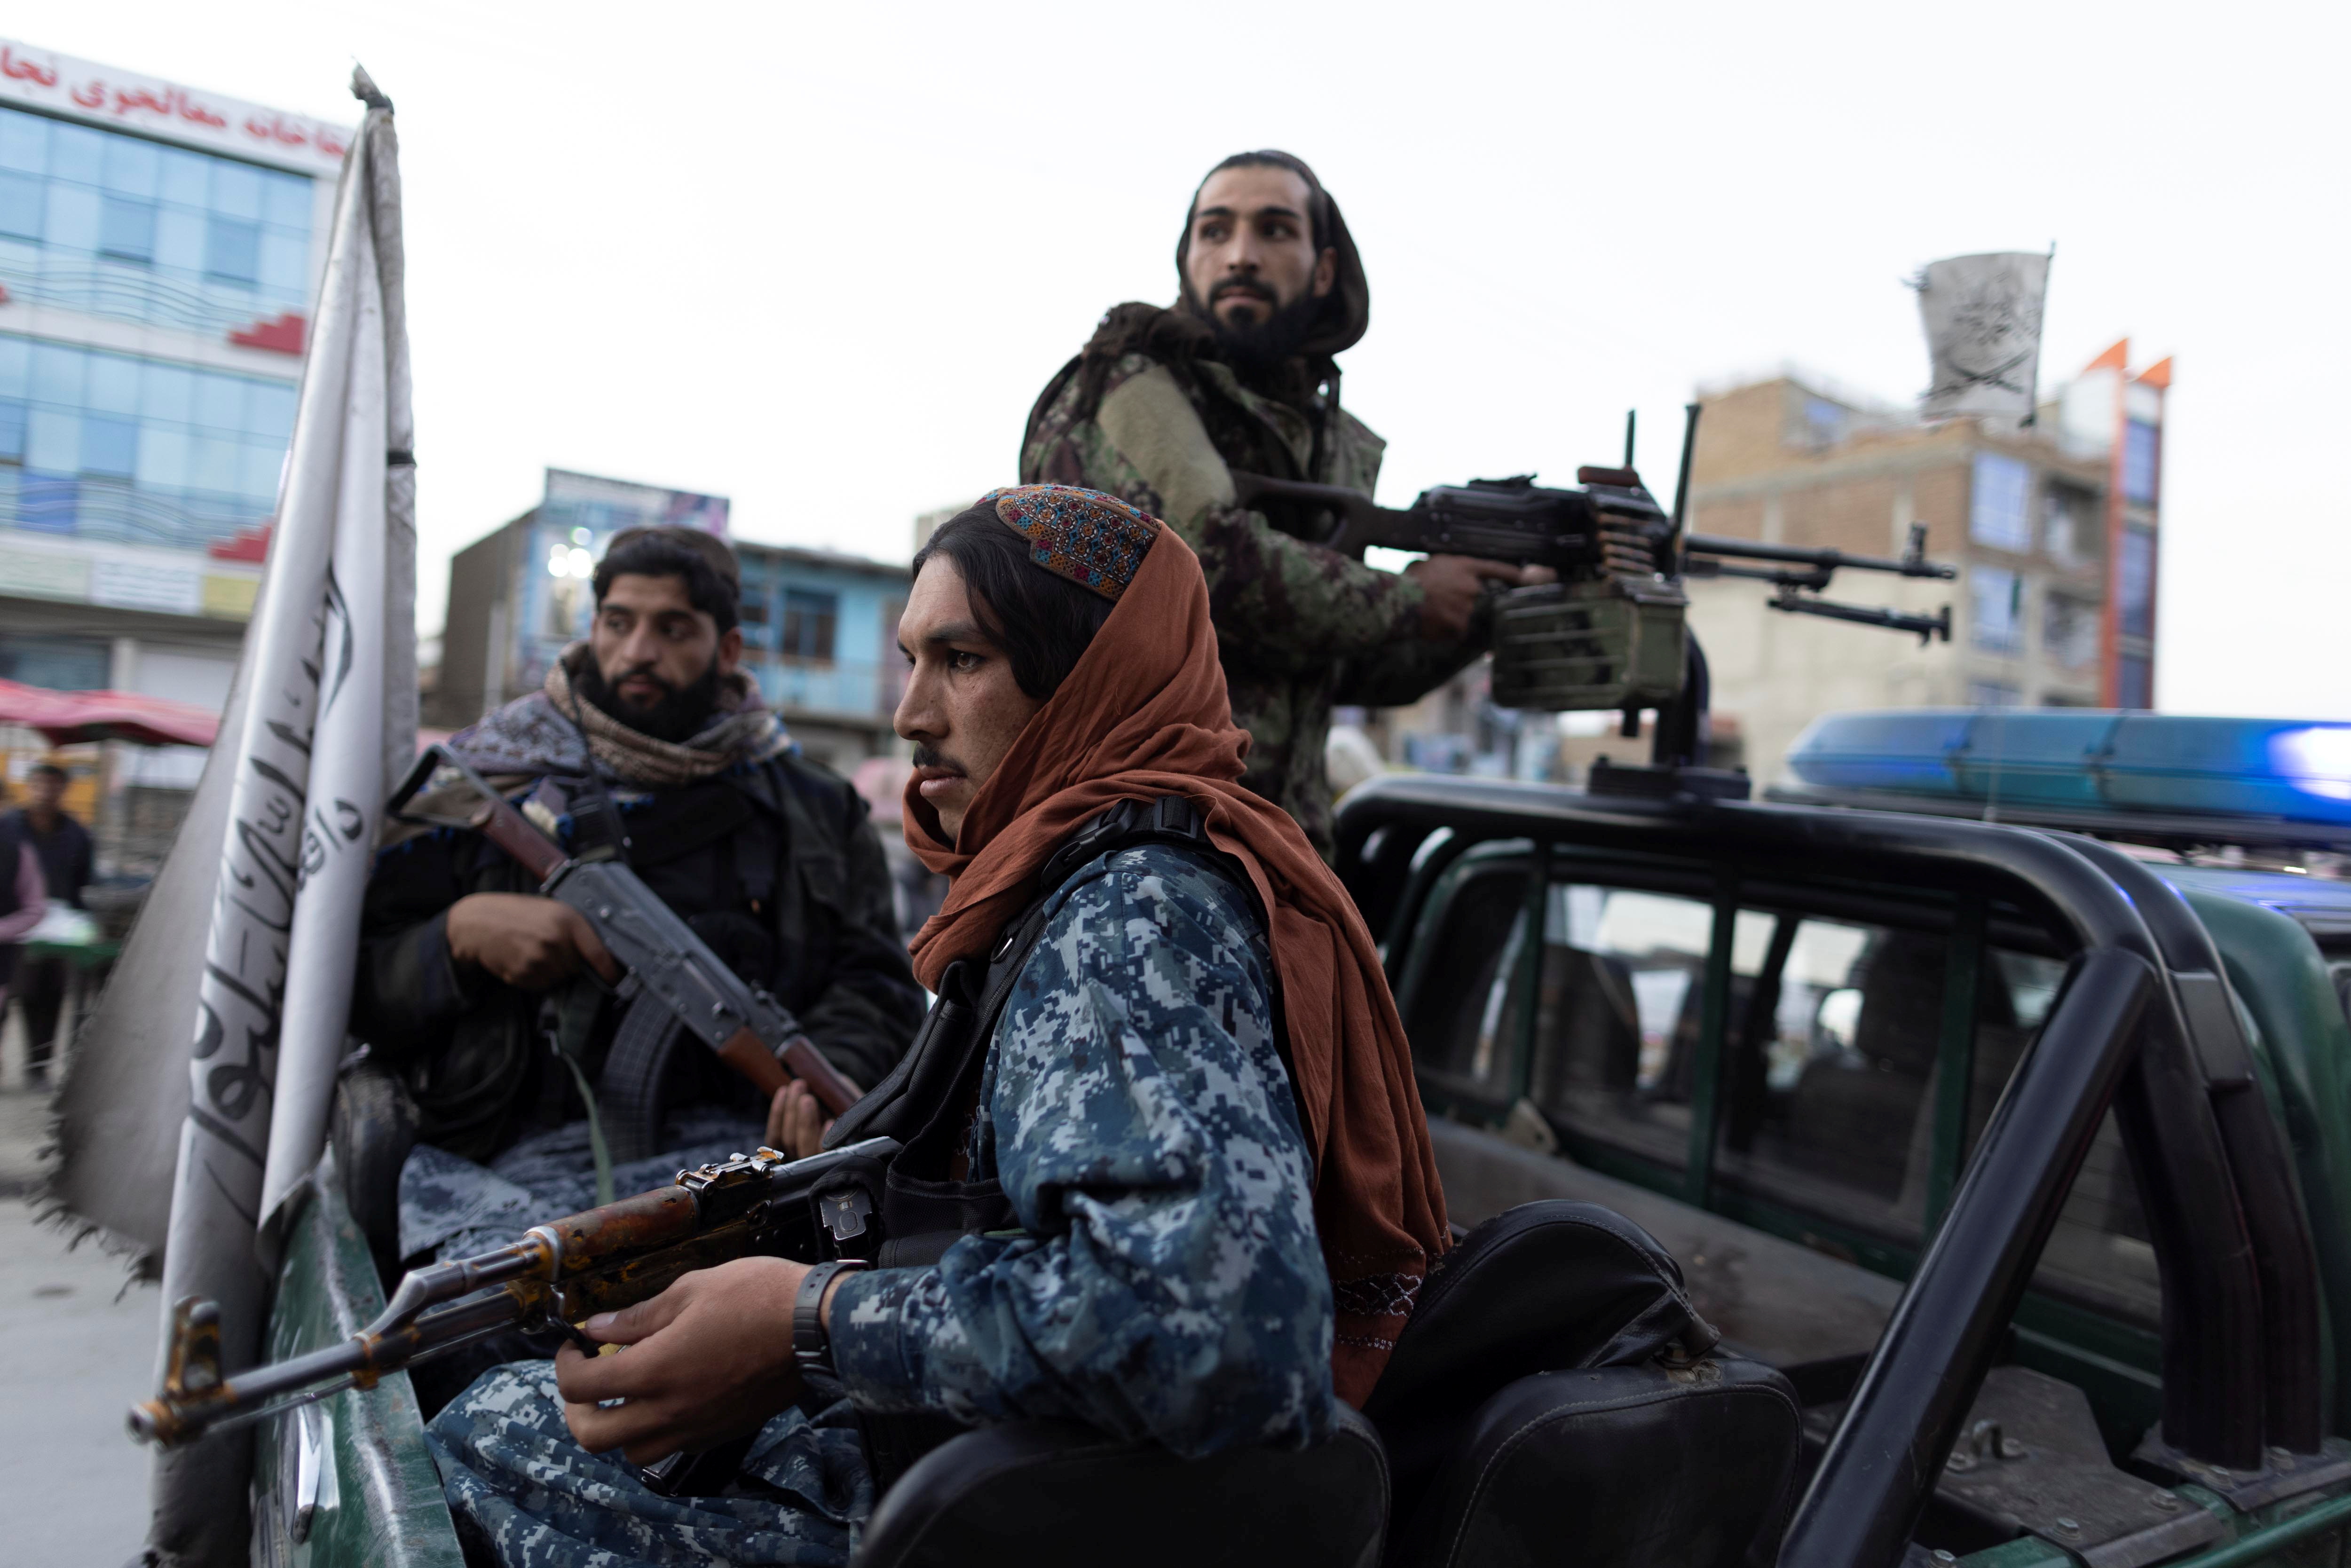 Taliban members in charge of security patrol in Kabul, Afghanistan October 28, 2021. REUTERS/Jorge Silva